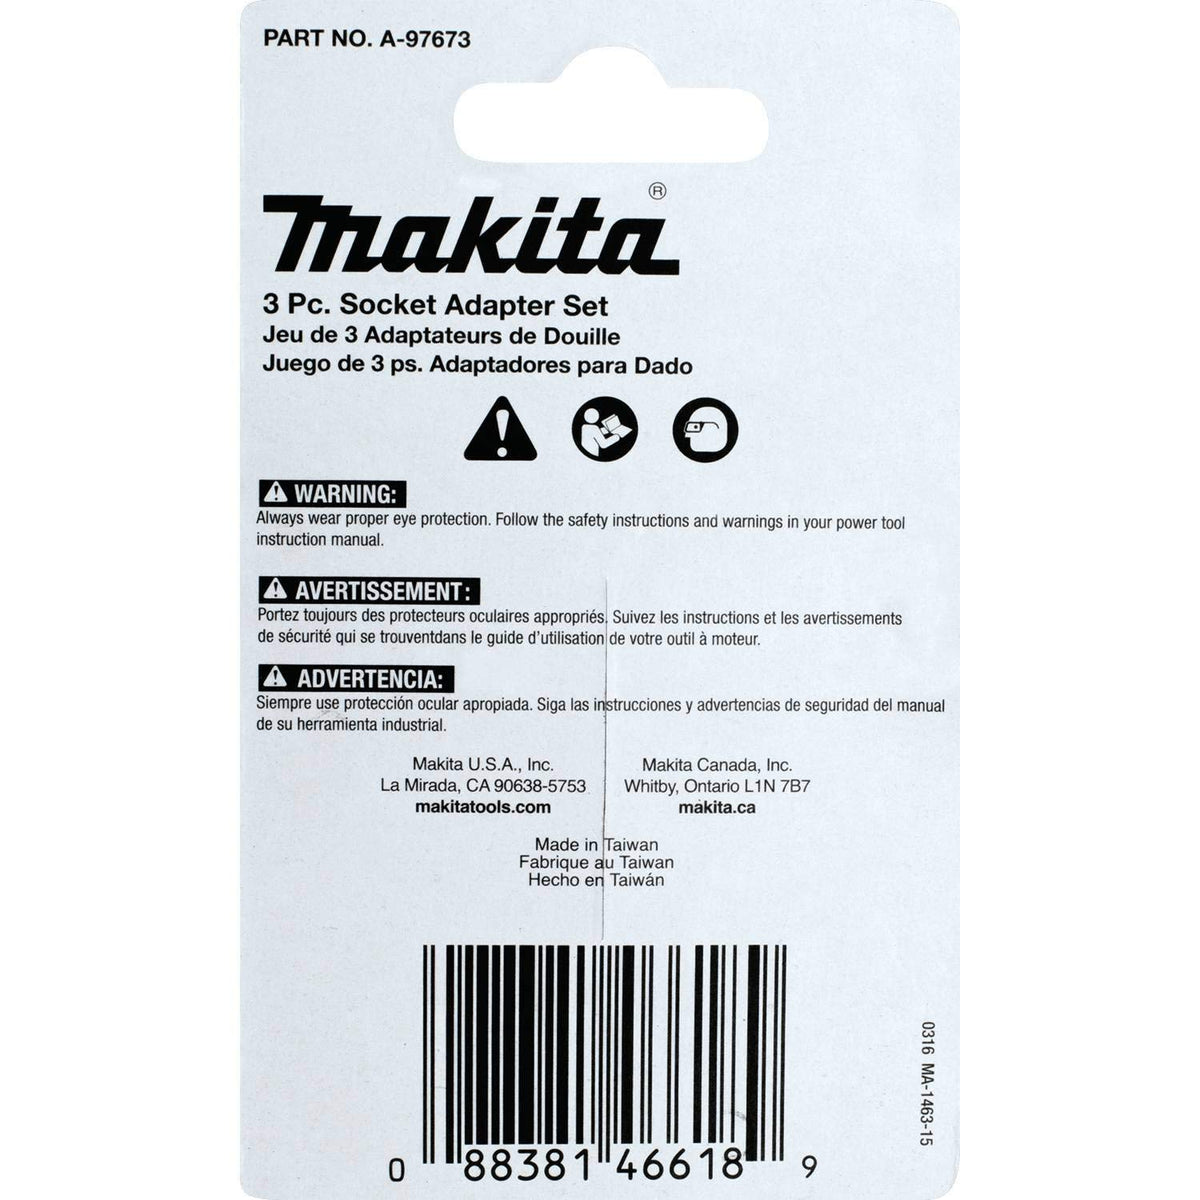 Makita Canada Inc